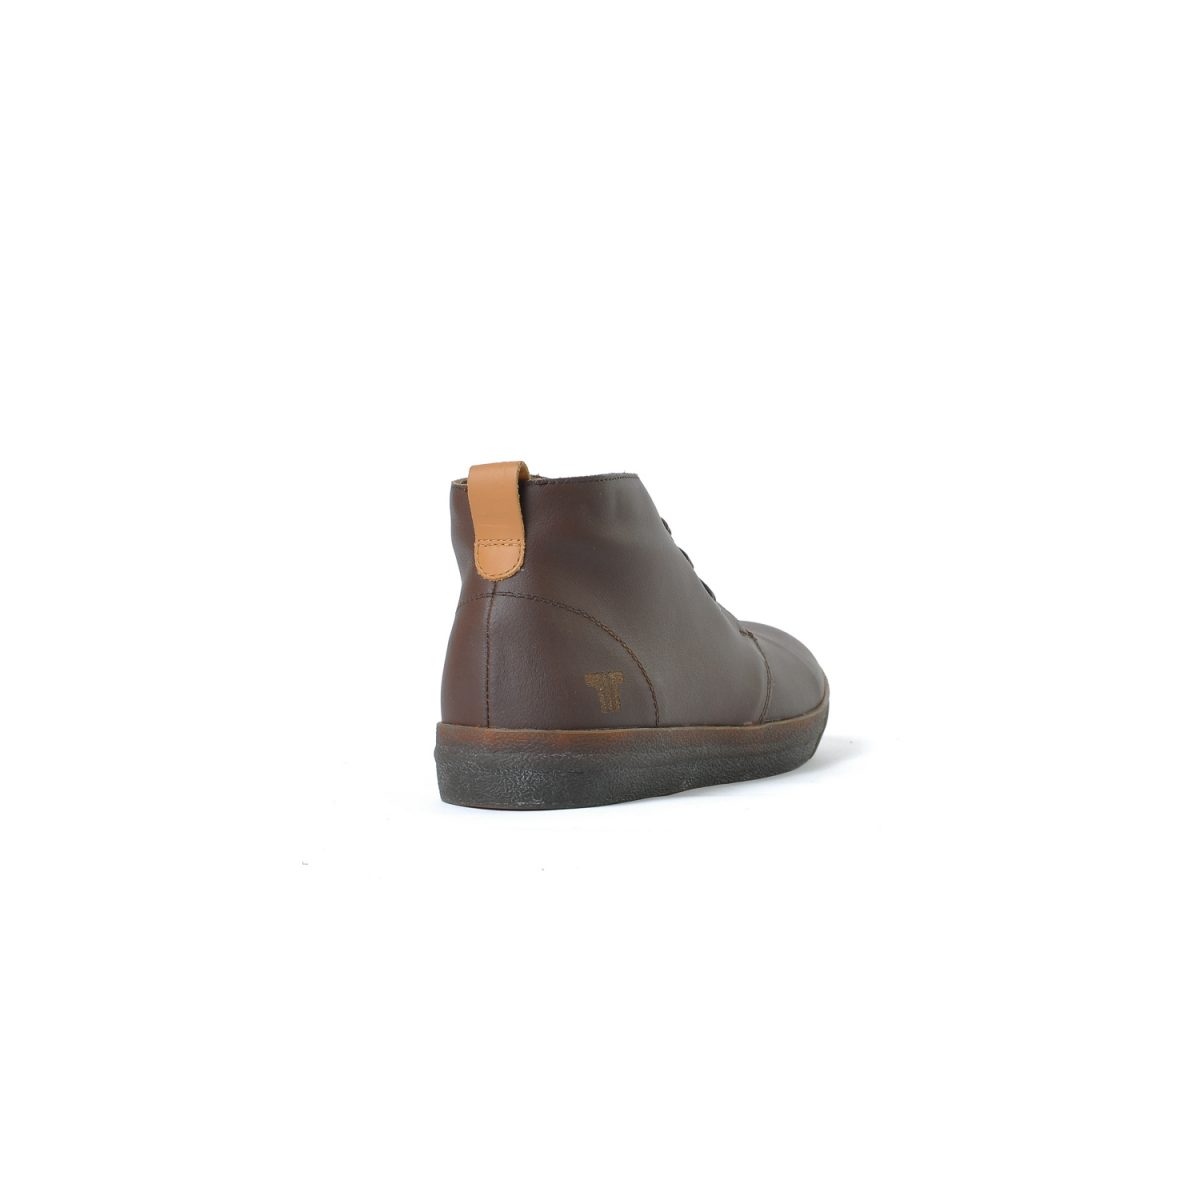 Tisza shoes - Alfa - Brown padded